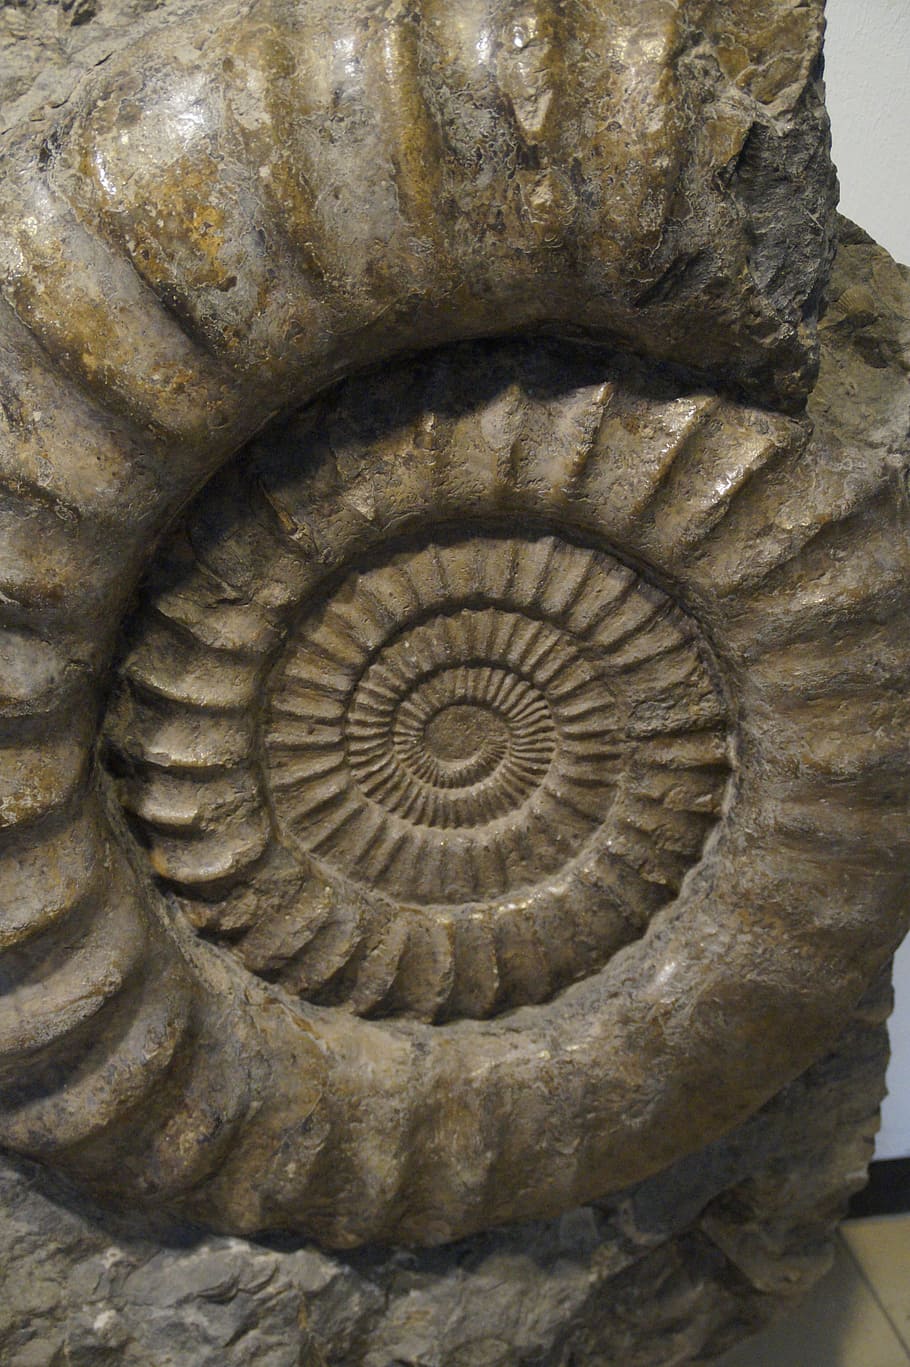 fossil, snail, ammonit, fossilized, petrification, stone, petrified, spiral, prehistoric times, snail shell